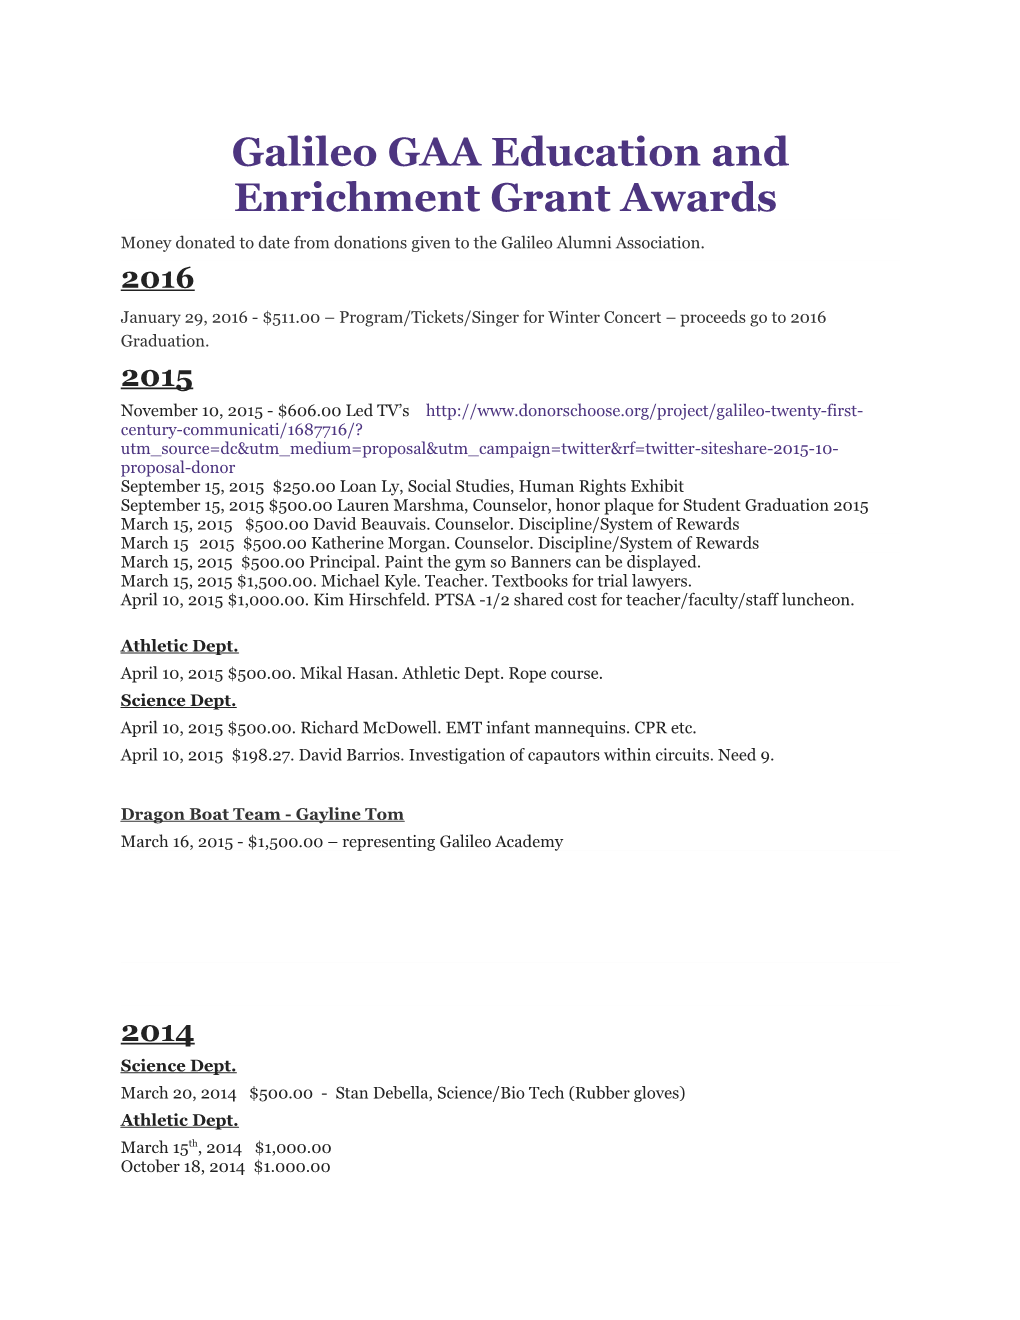 Galileo GAA Education and Enrichment Grant Awards